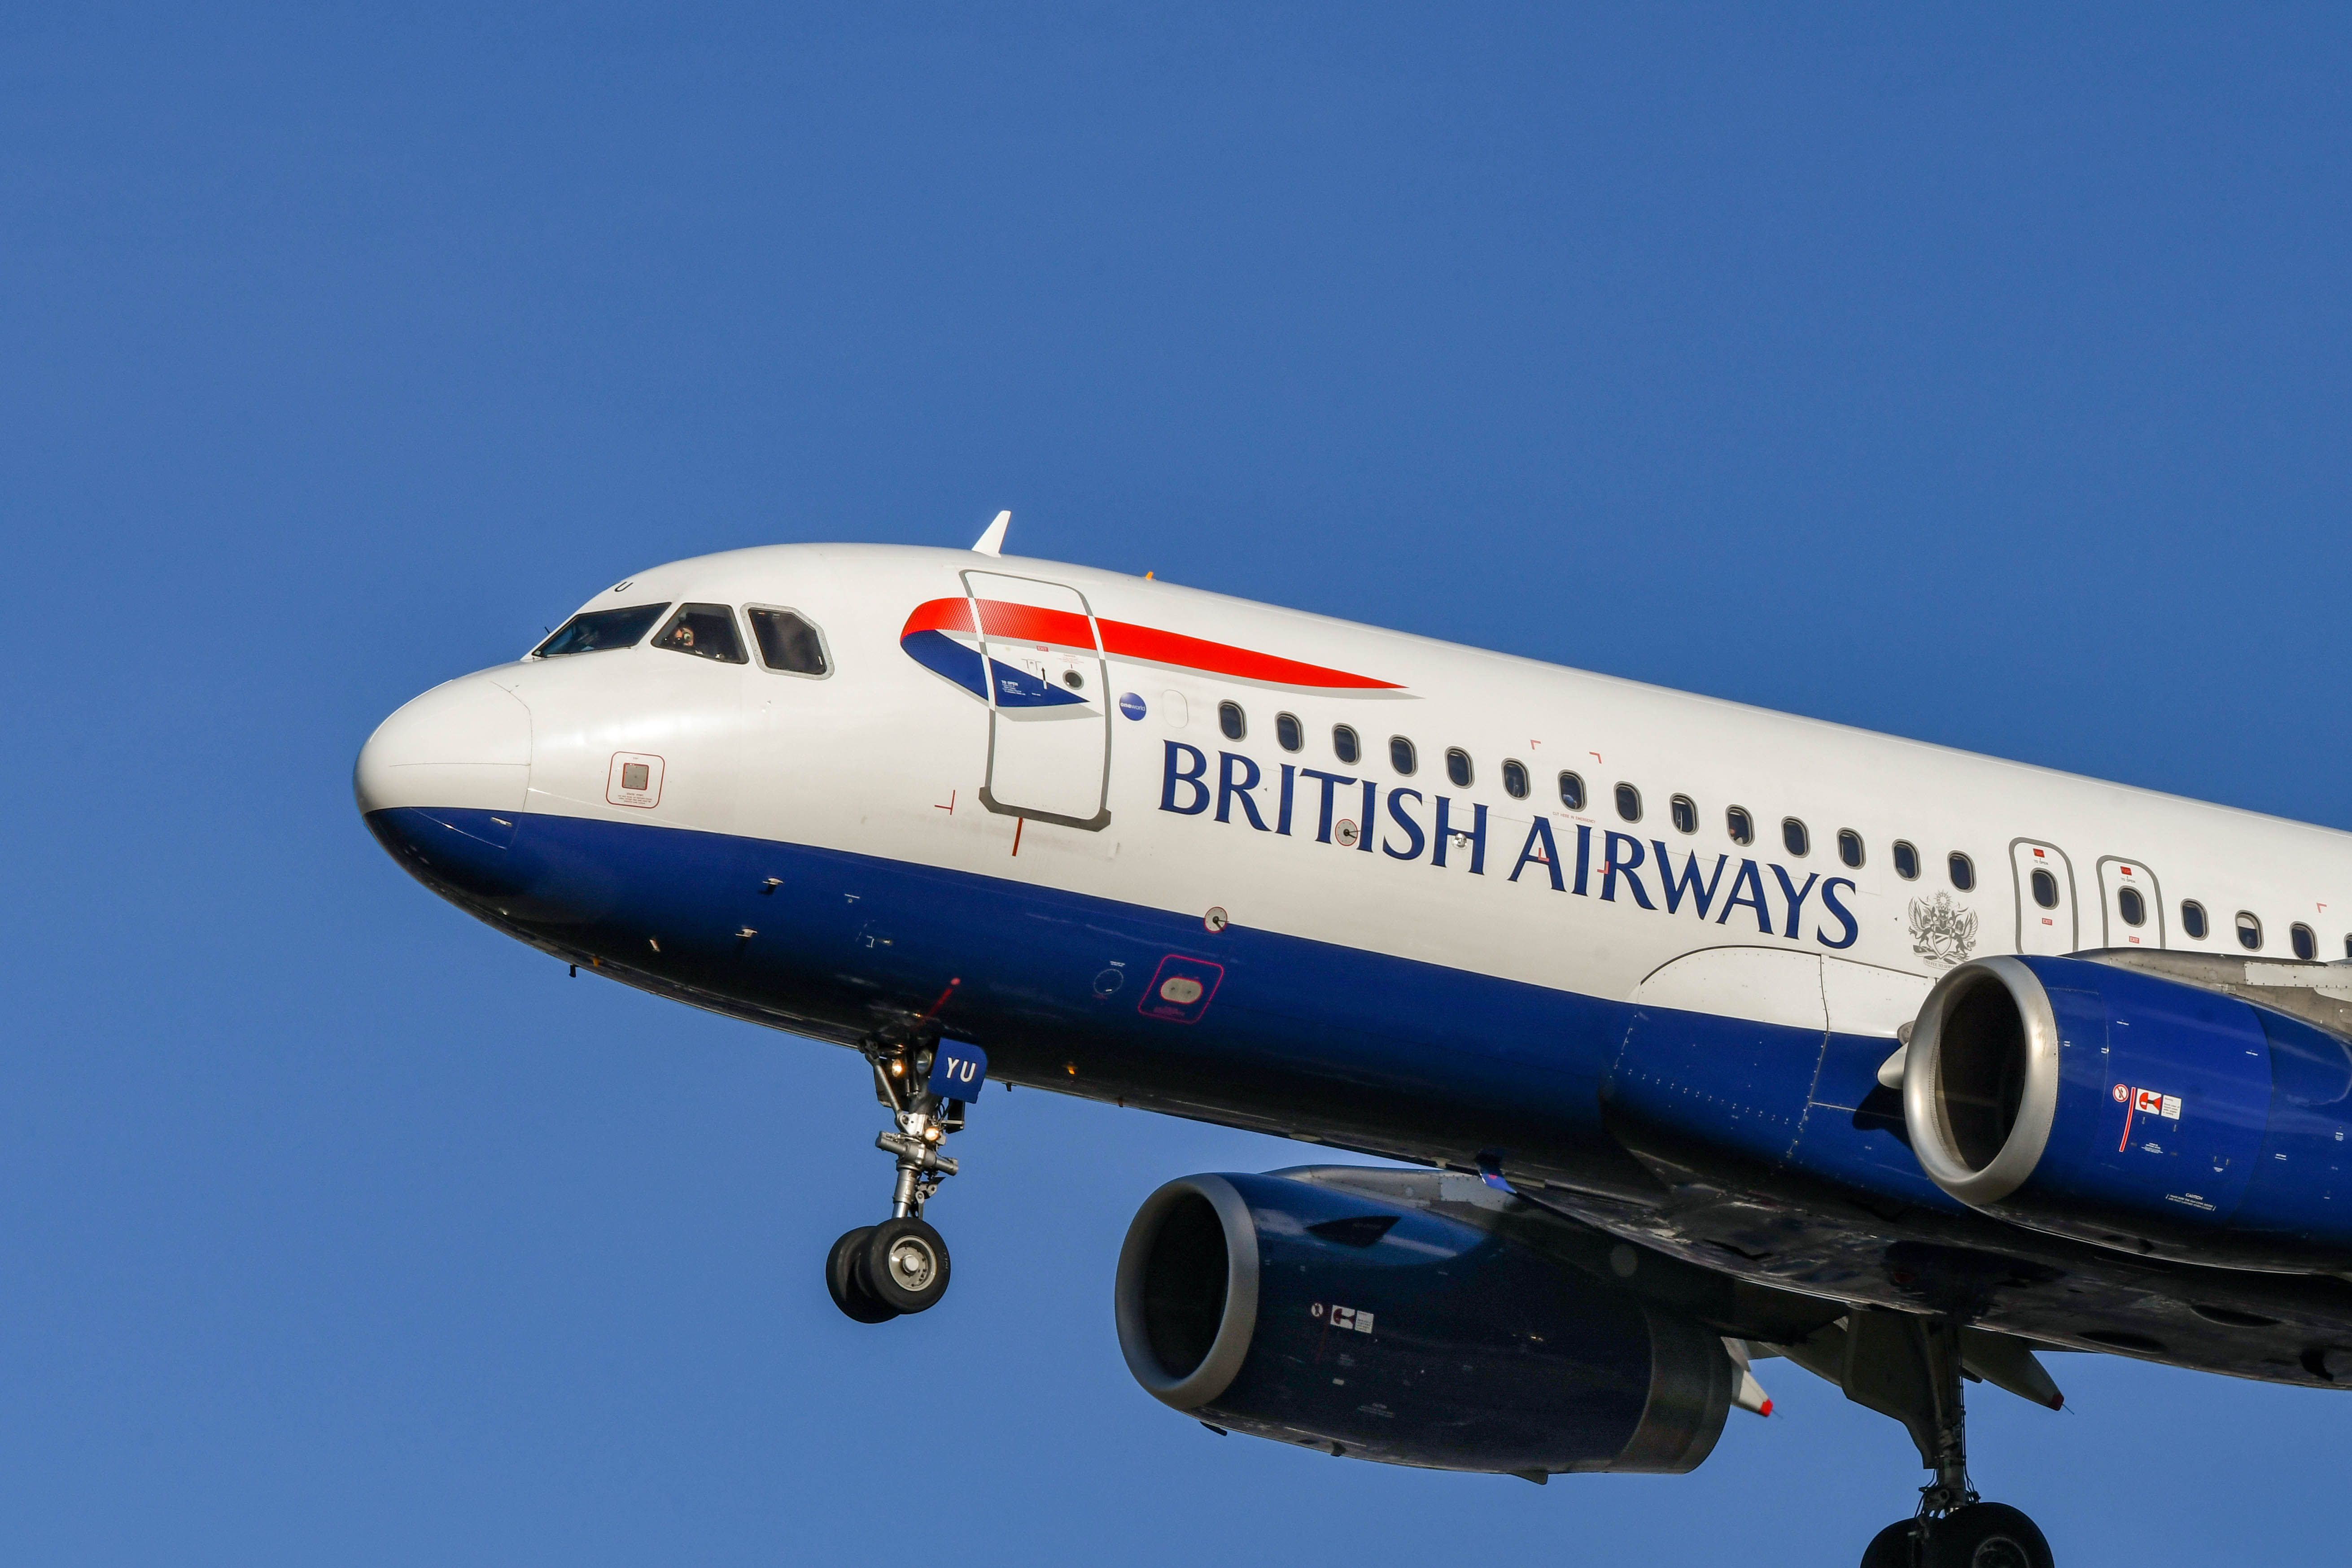 A British Airways Airbus A320 taking off